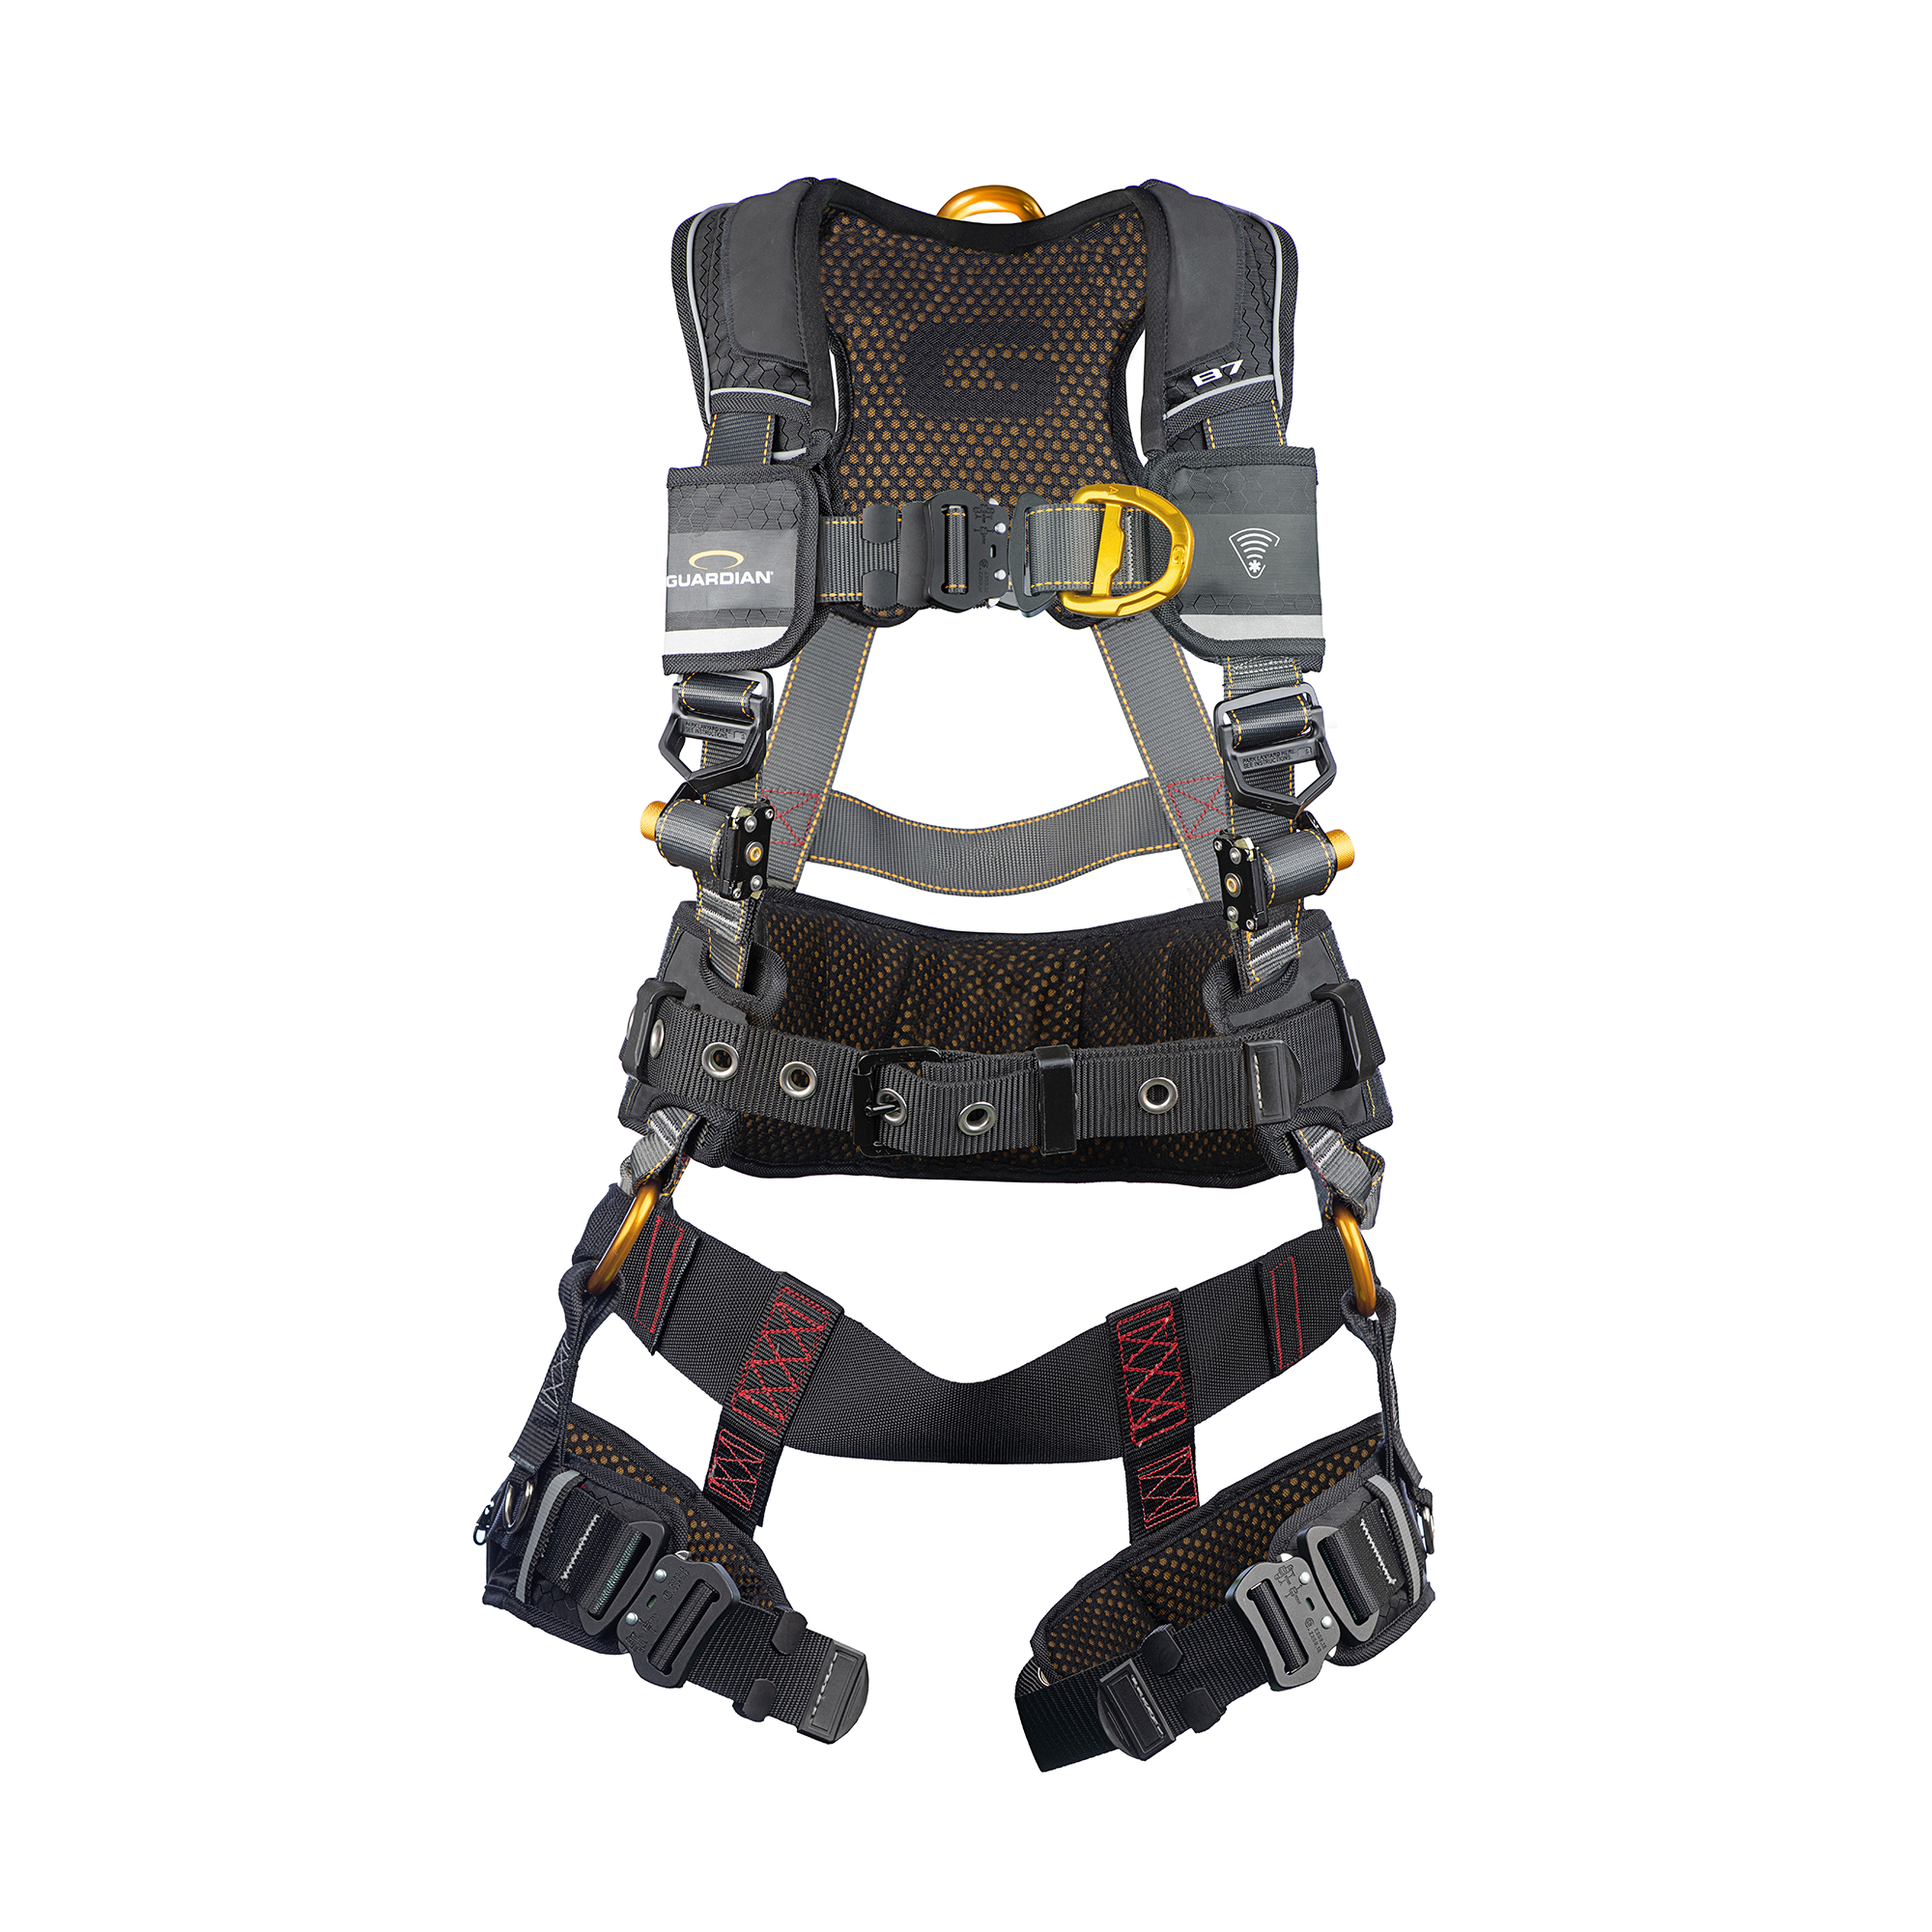 Guardian B7 Comfort Full-Body Harness w/ Waist Pad, Quick-Connect